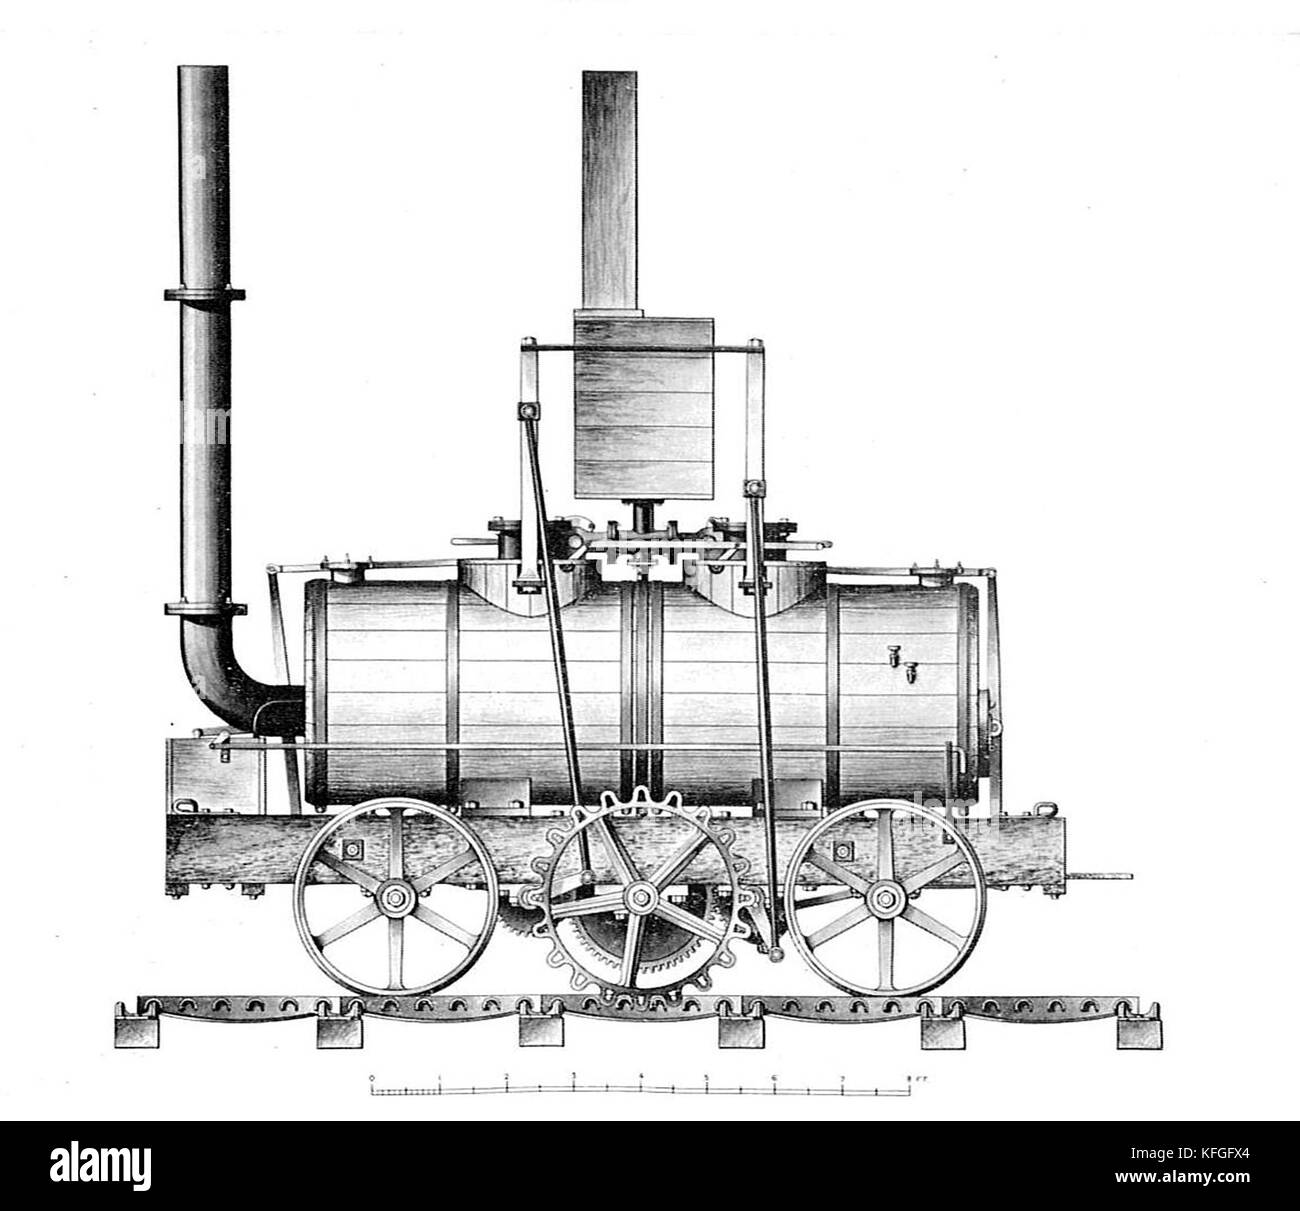 La locomotiva Salamanca, la prima locomotiva a vapore di successo commerciale, costruita nel 1812 Foto Stock